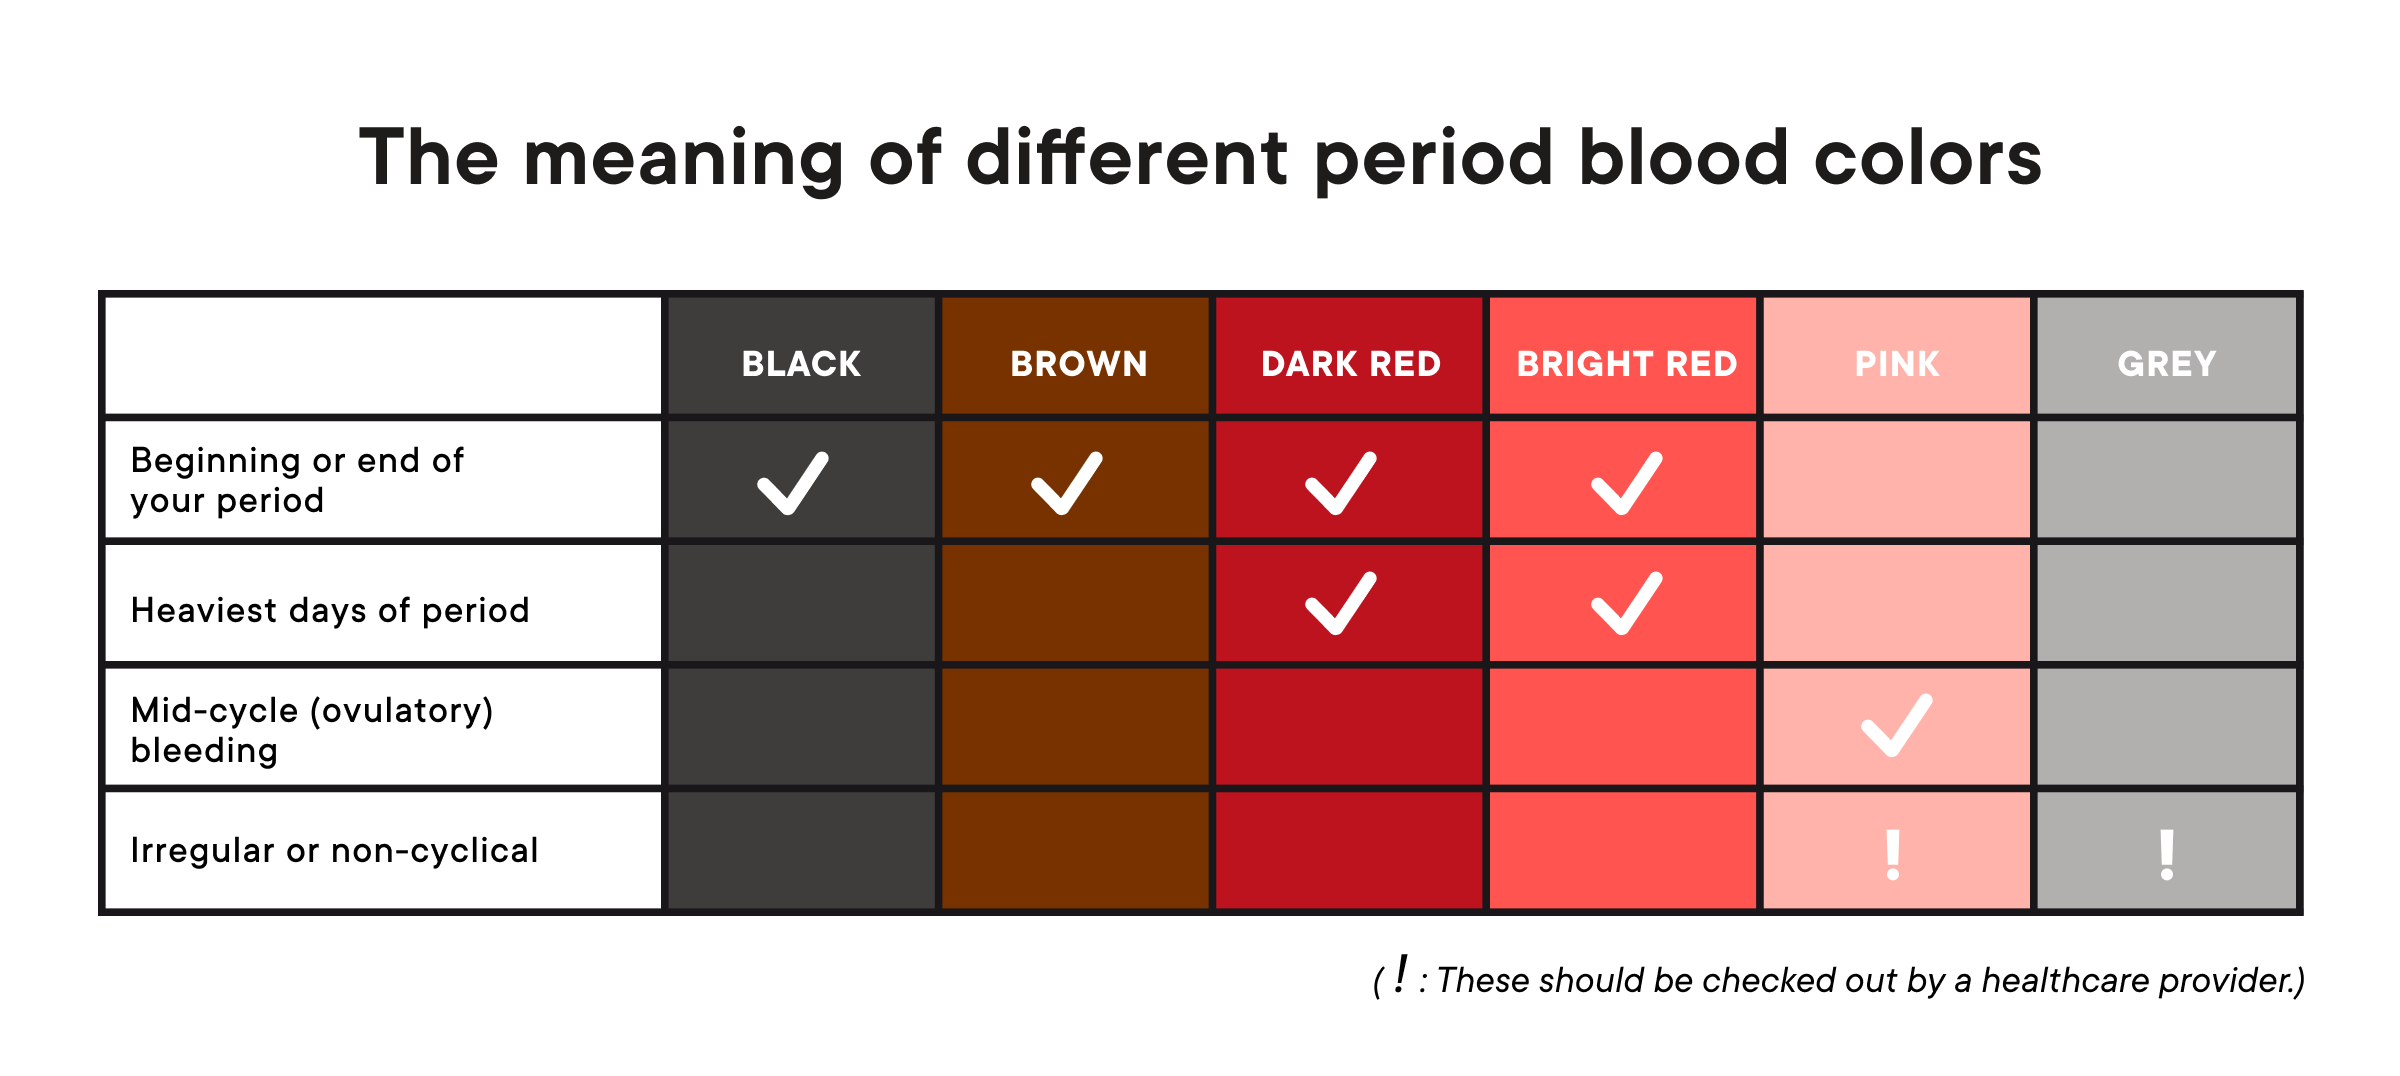 Period blood color: brown, black, or dark does